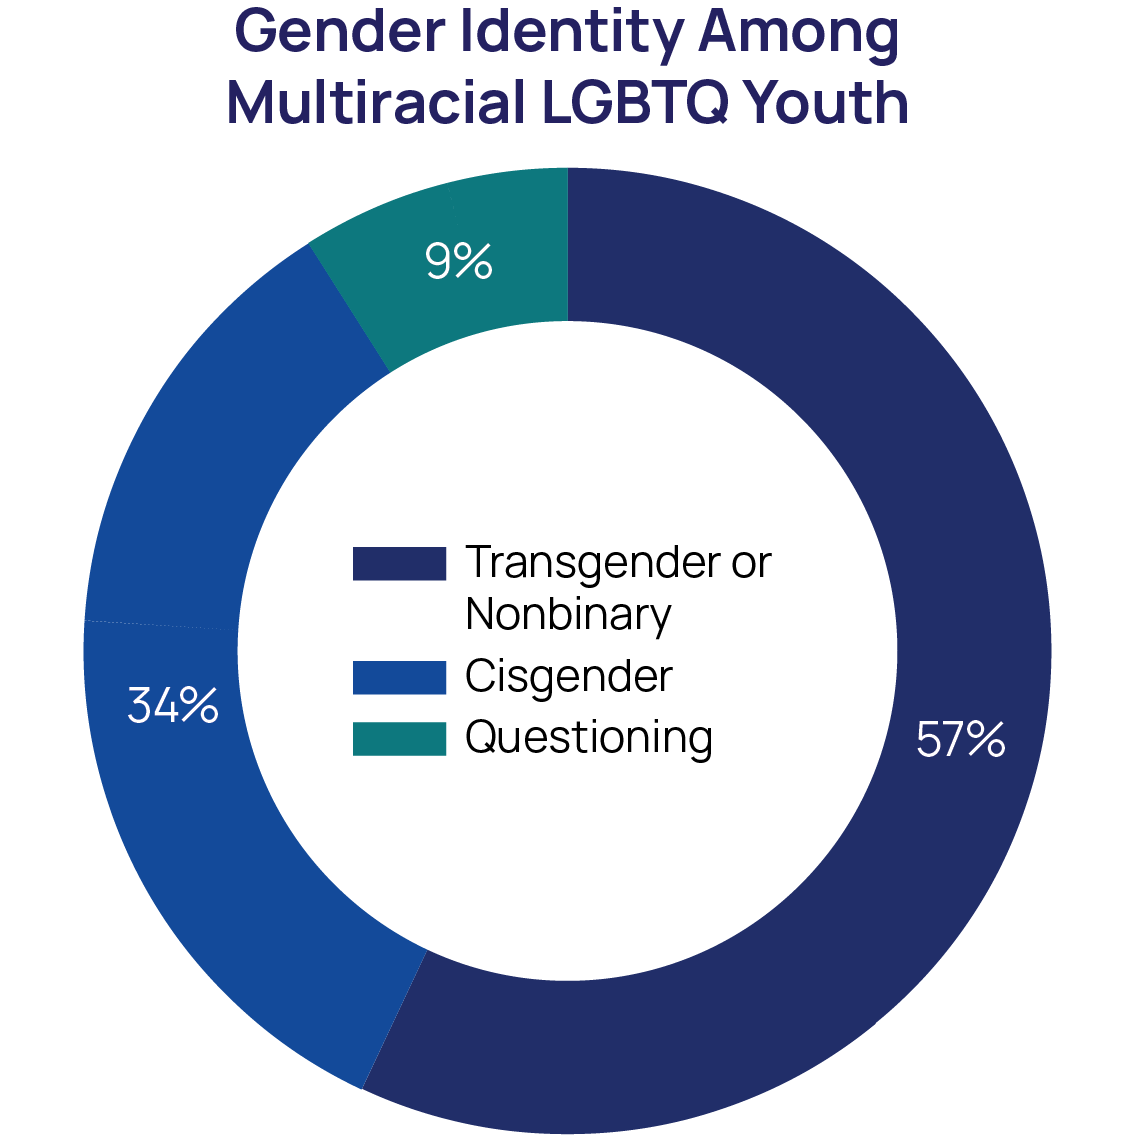 Gender Identity among Multiracial LGBTQ Youth